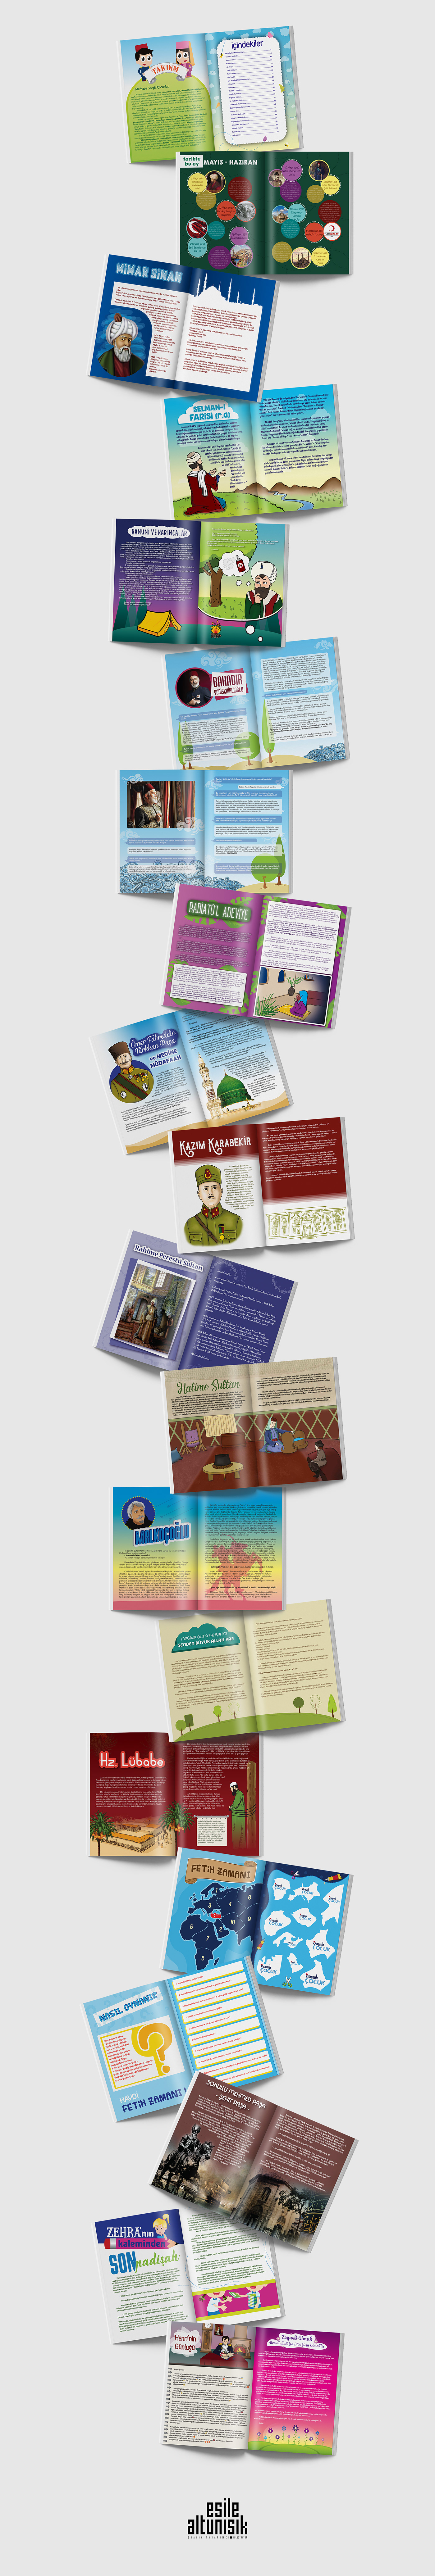 Page designs children's magazine illustrations İllustraston magazine cartoon graphic design  osmanlı çocuk ottoman osmanlı çocuk dergisi